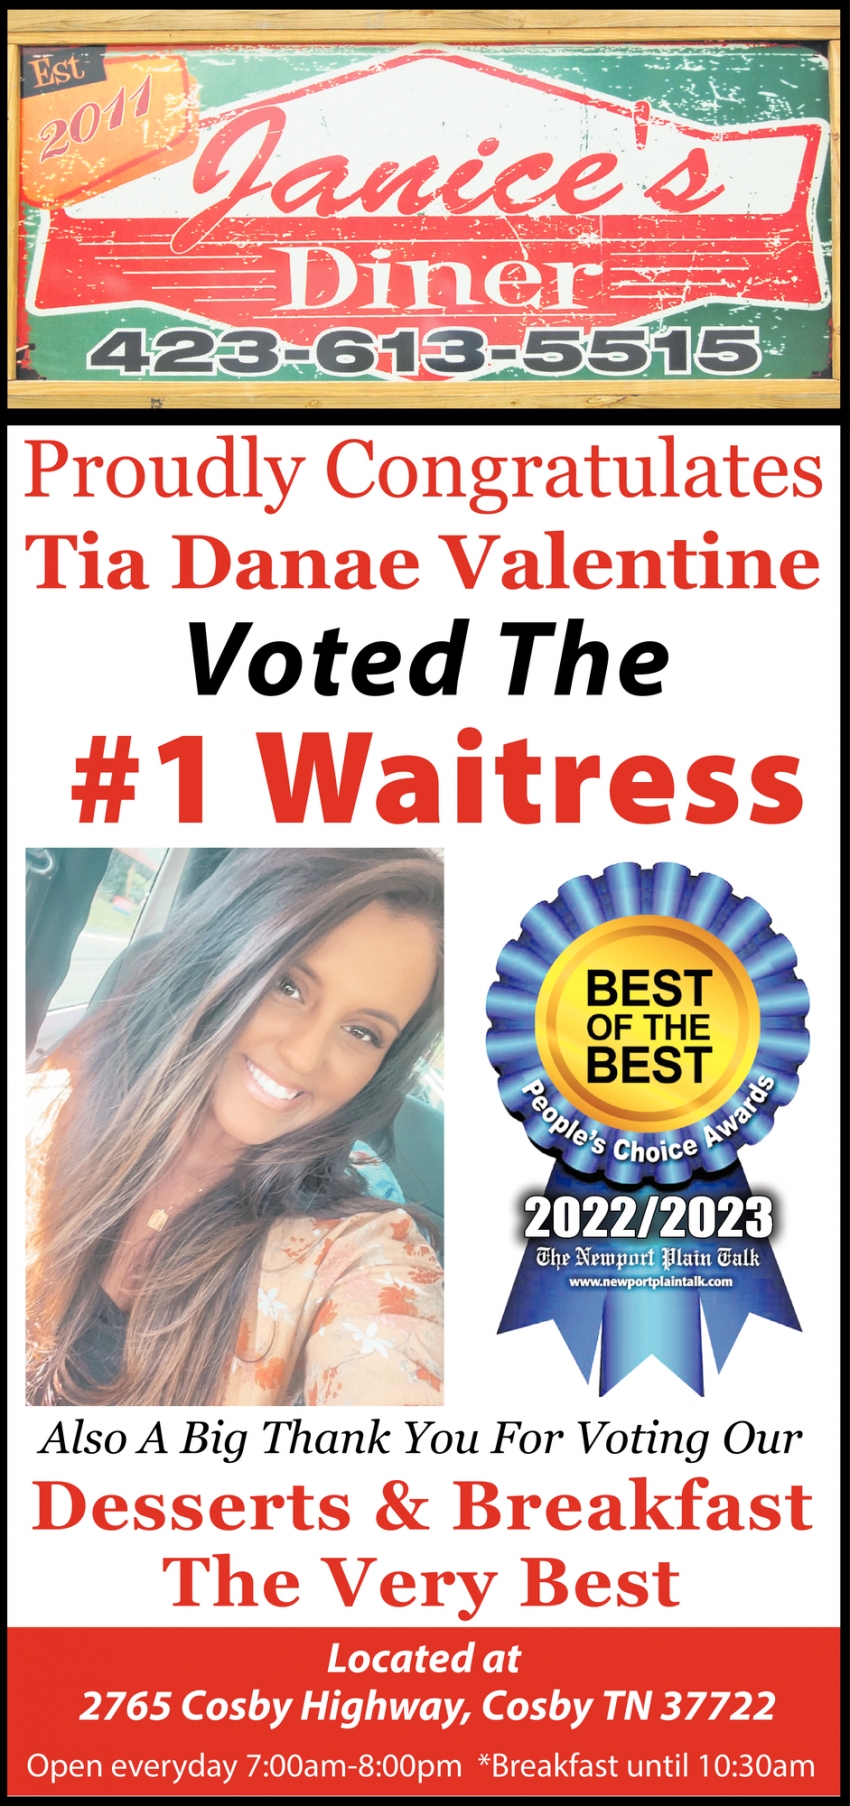 Voted The #1 Waitress